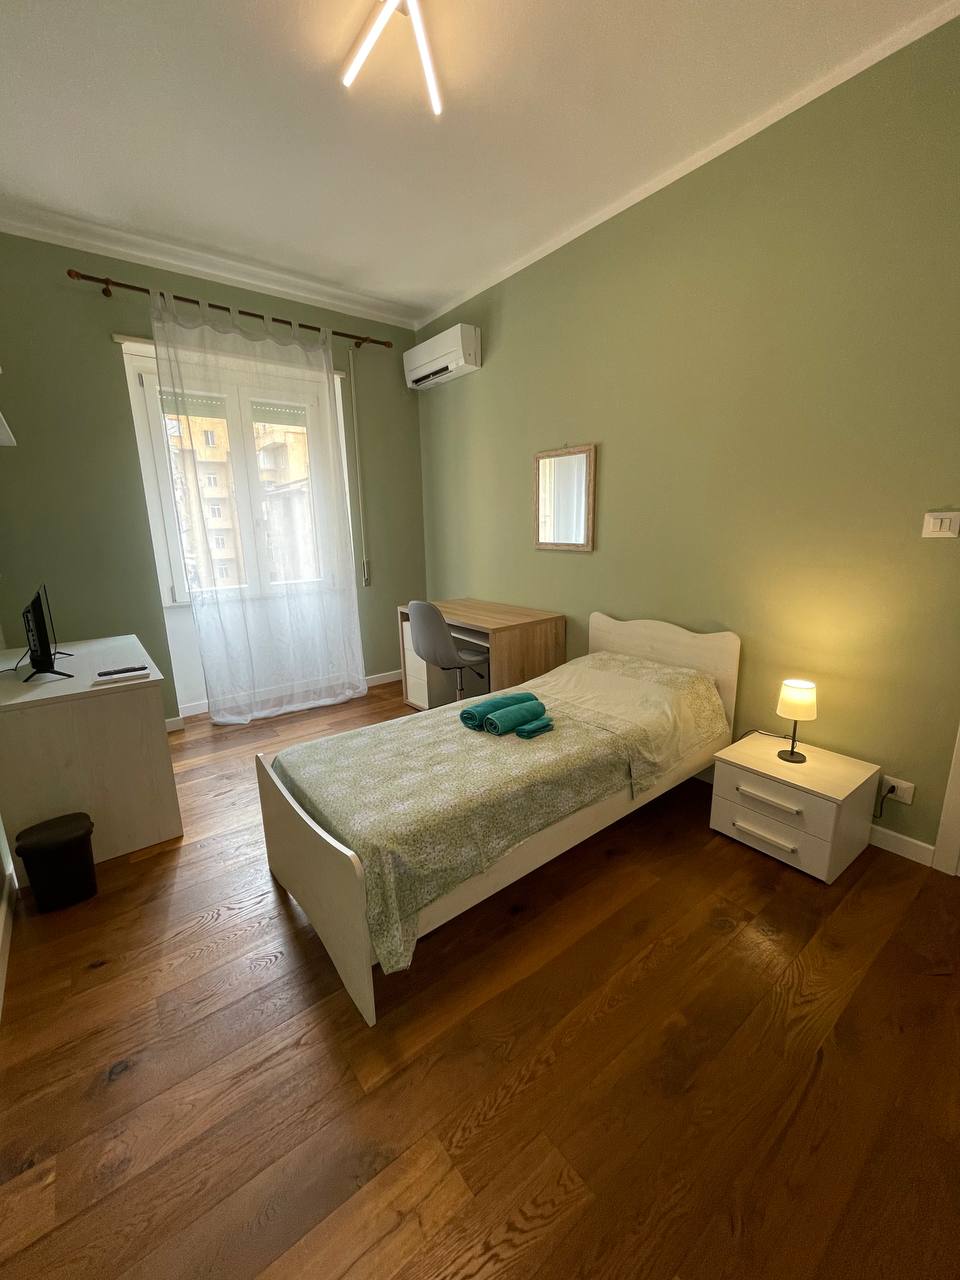 T-Rooms affittacamere affitta camere b&b Cagliari